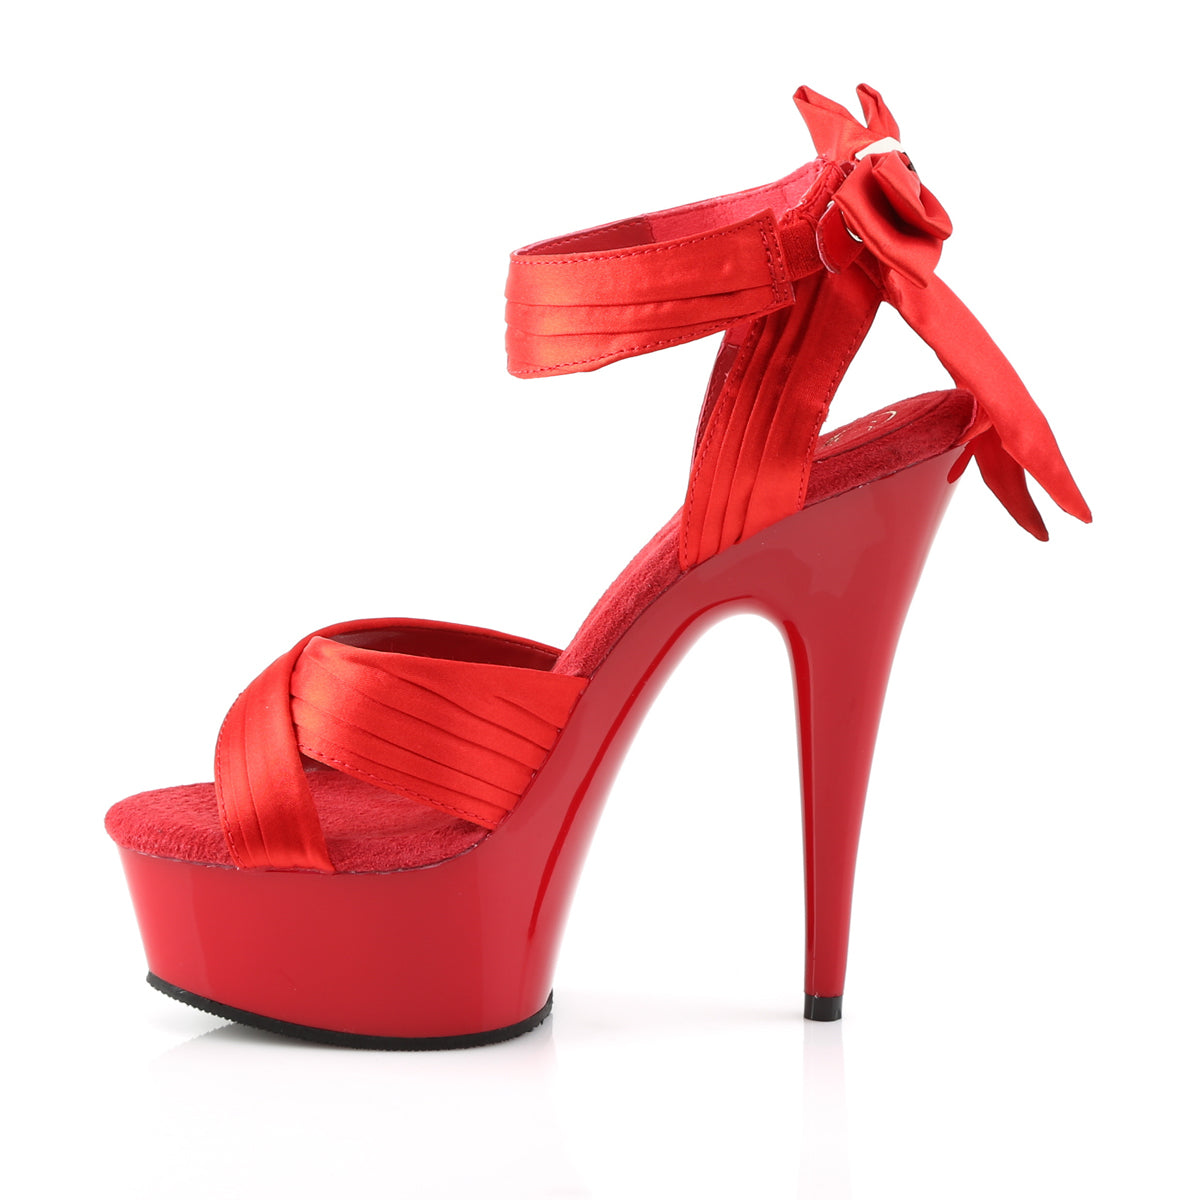 DELIGHT-668 Pleaser 6" Heel Red Satin Pole Dancing Platforms-Pleaser- Sexy Shoes Pole Dance Heels